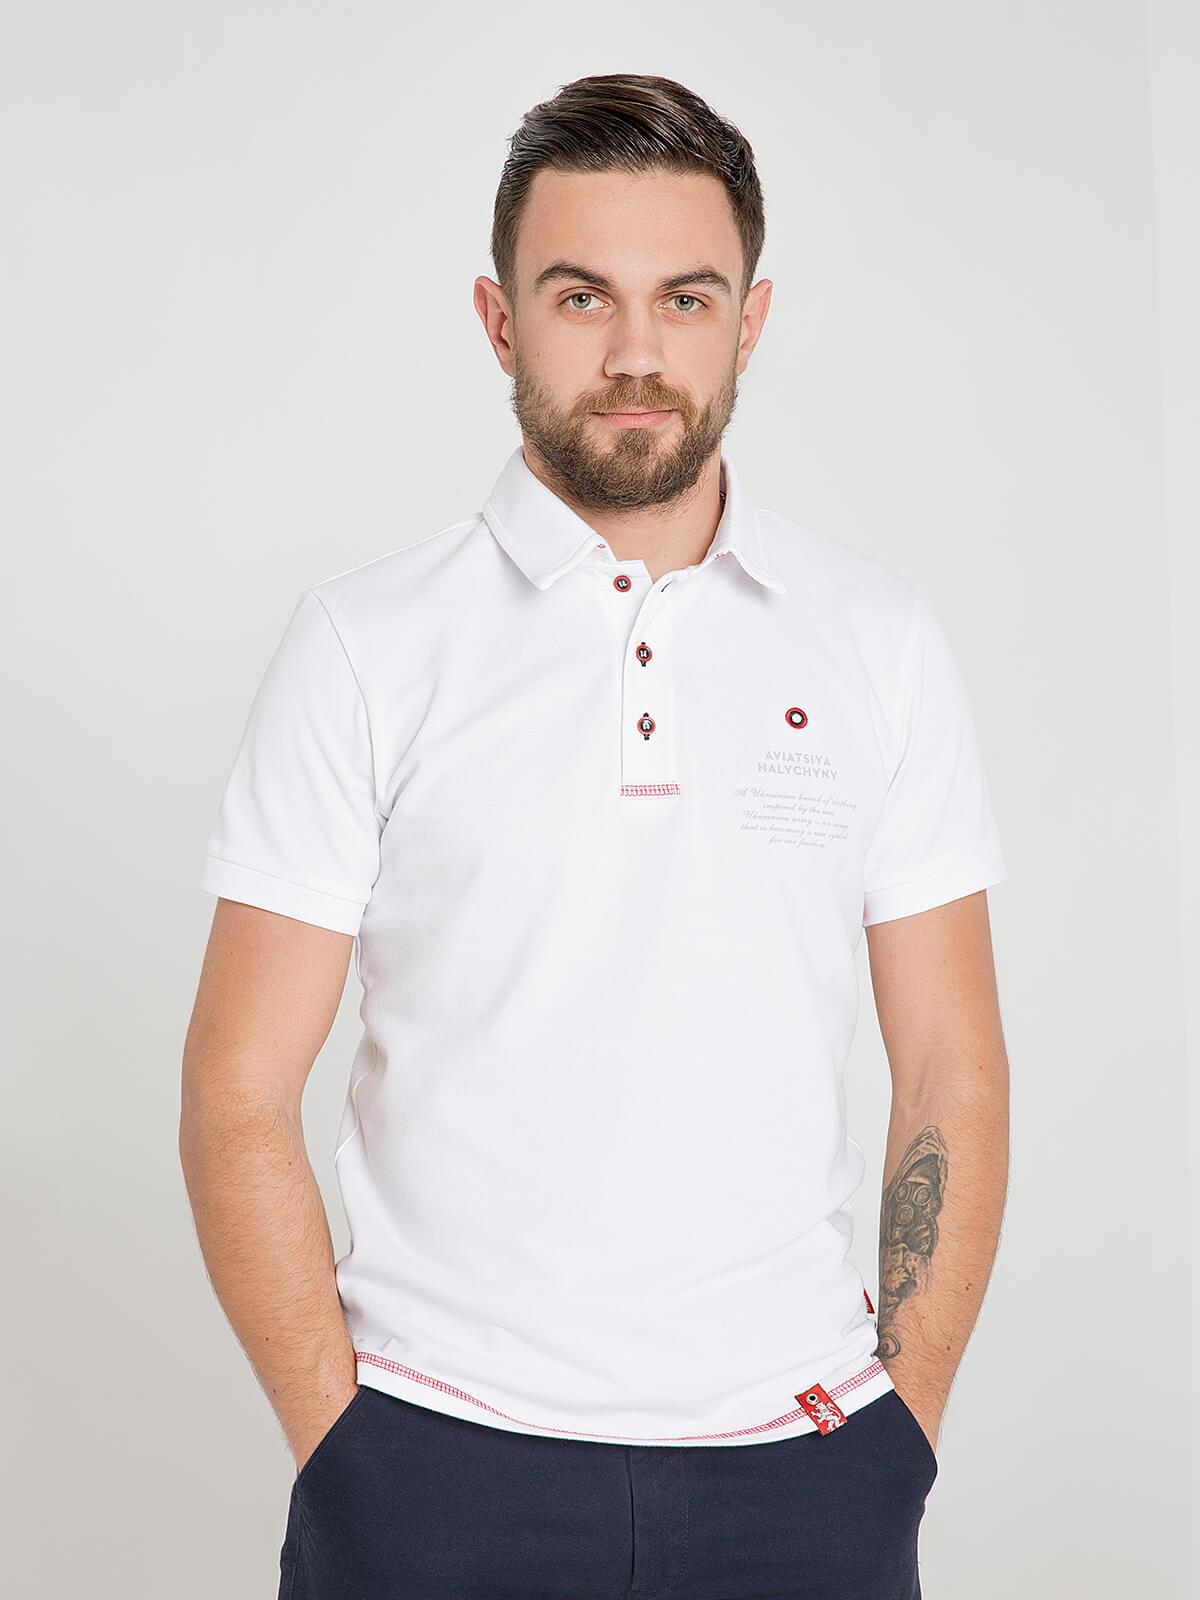 Men's Polo Shirt Wings. Color white. Unisex polo (men’s sizes).